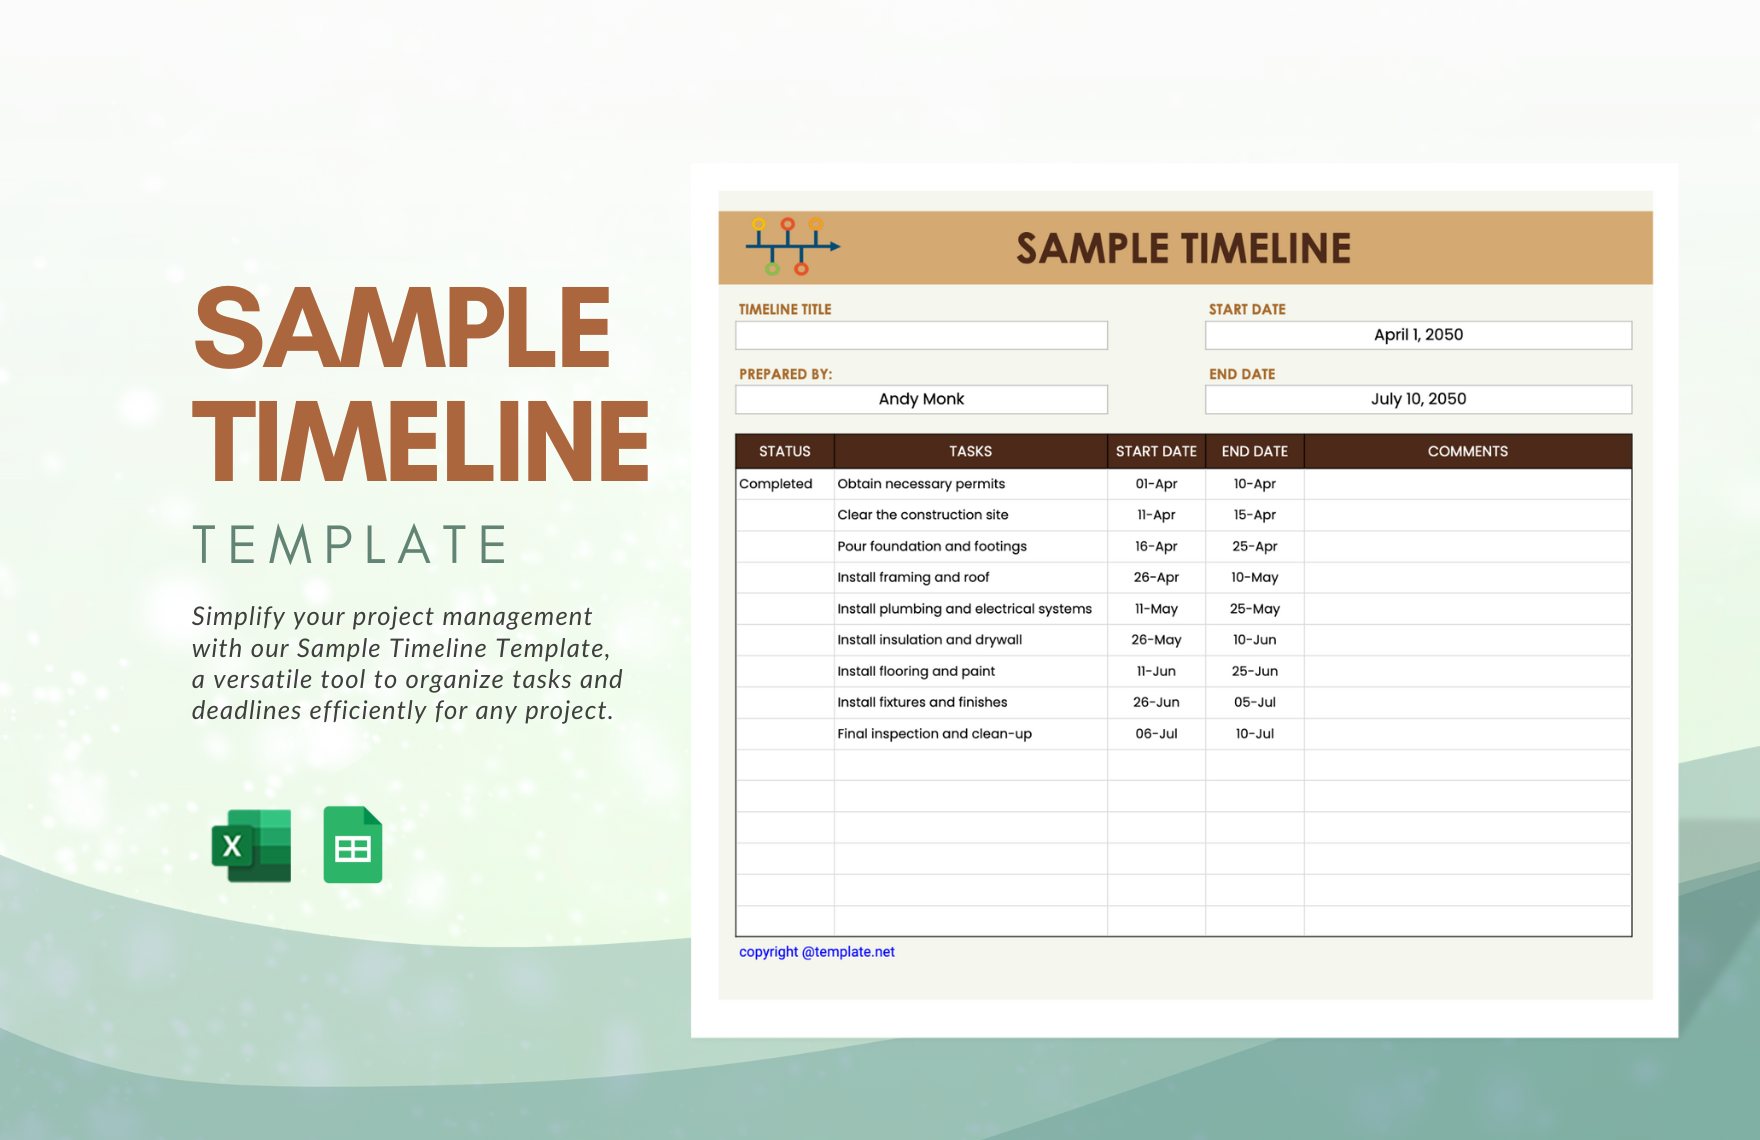 Free Sample Timeline Template in Excel, Google Sheets